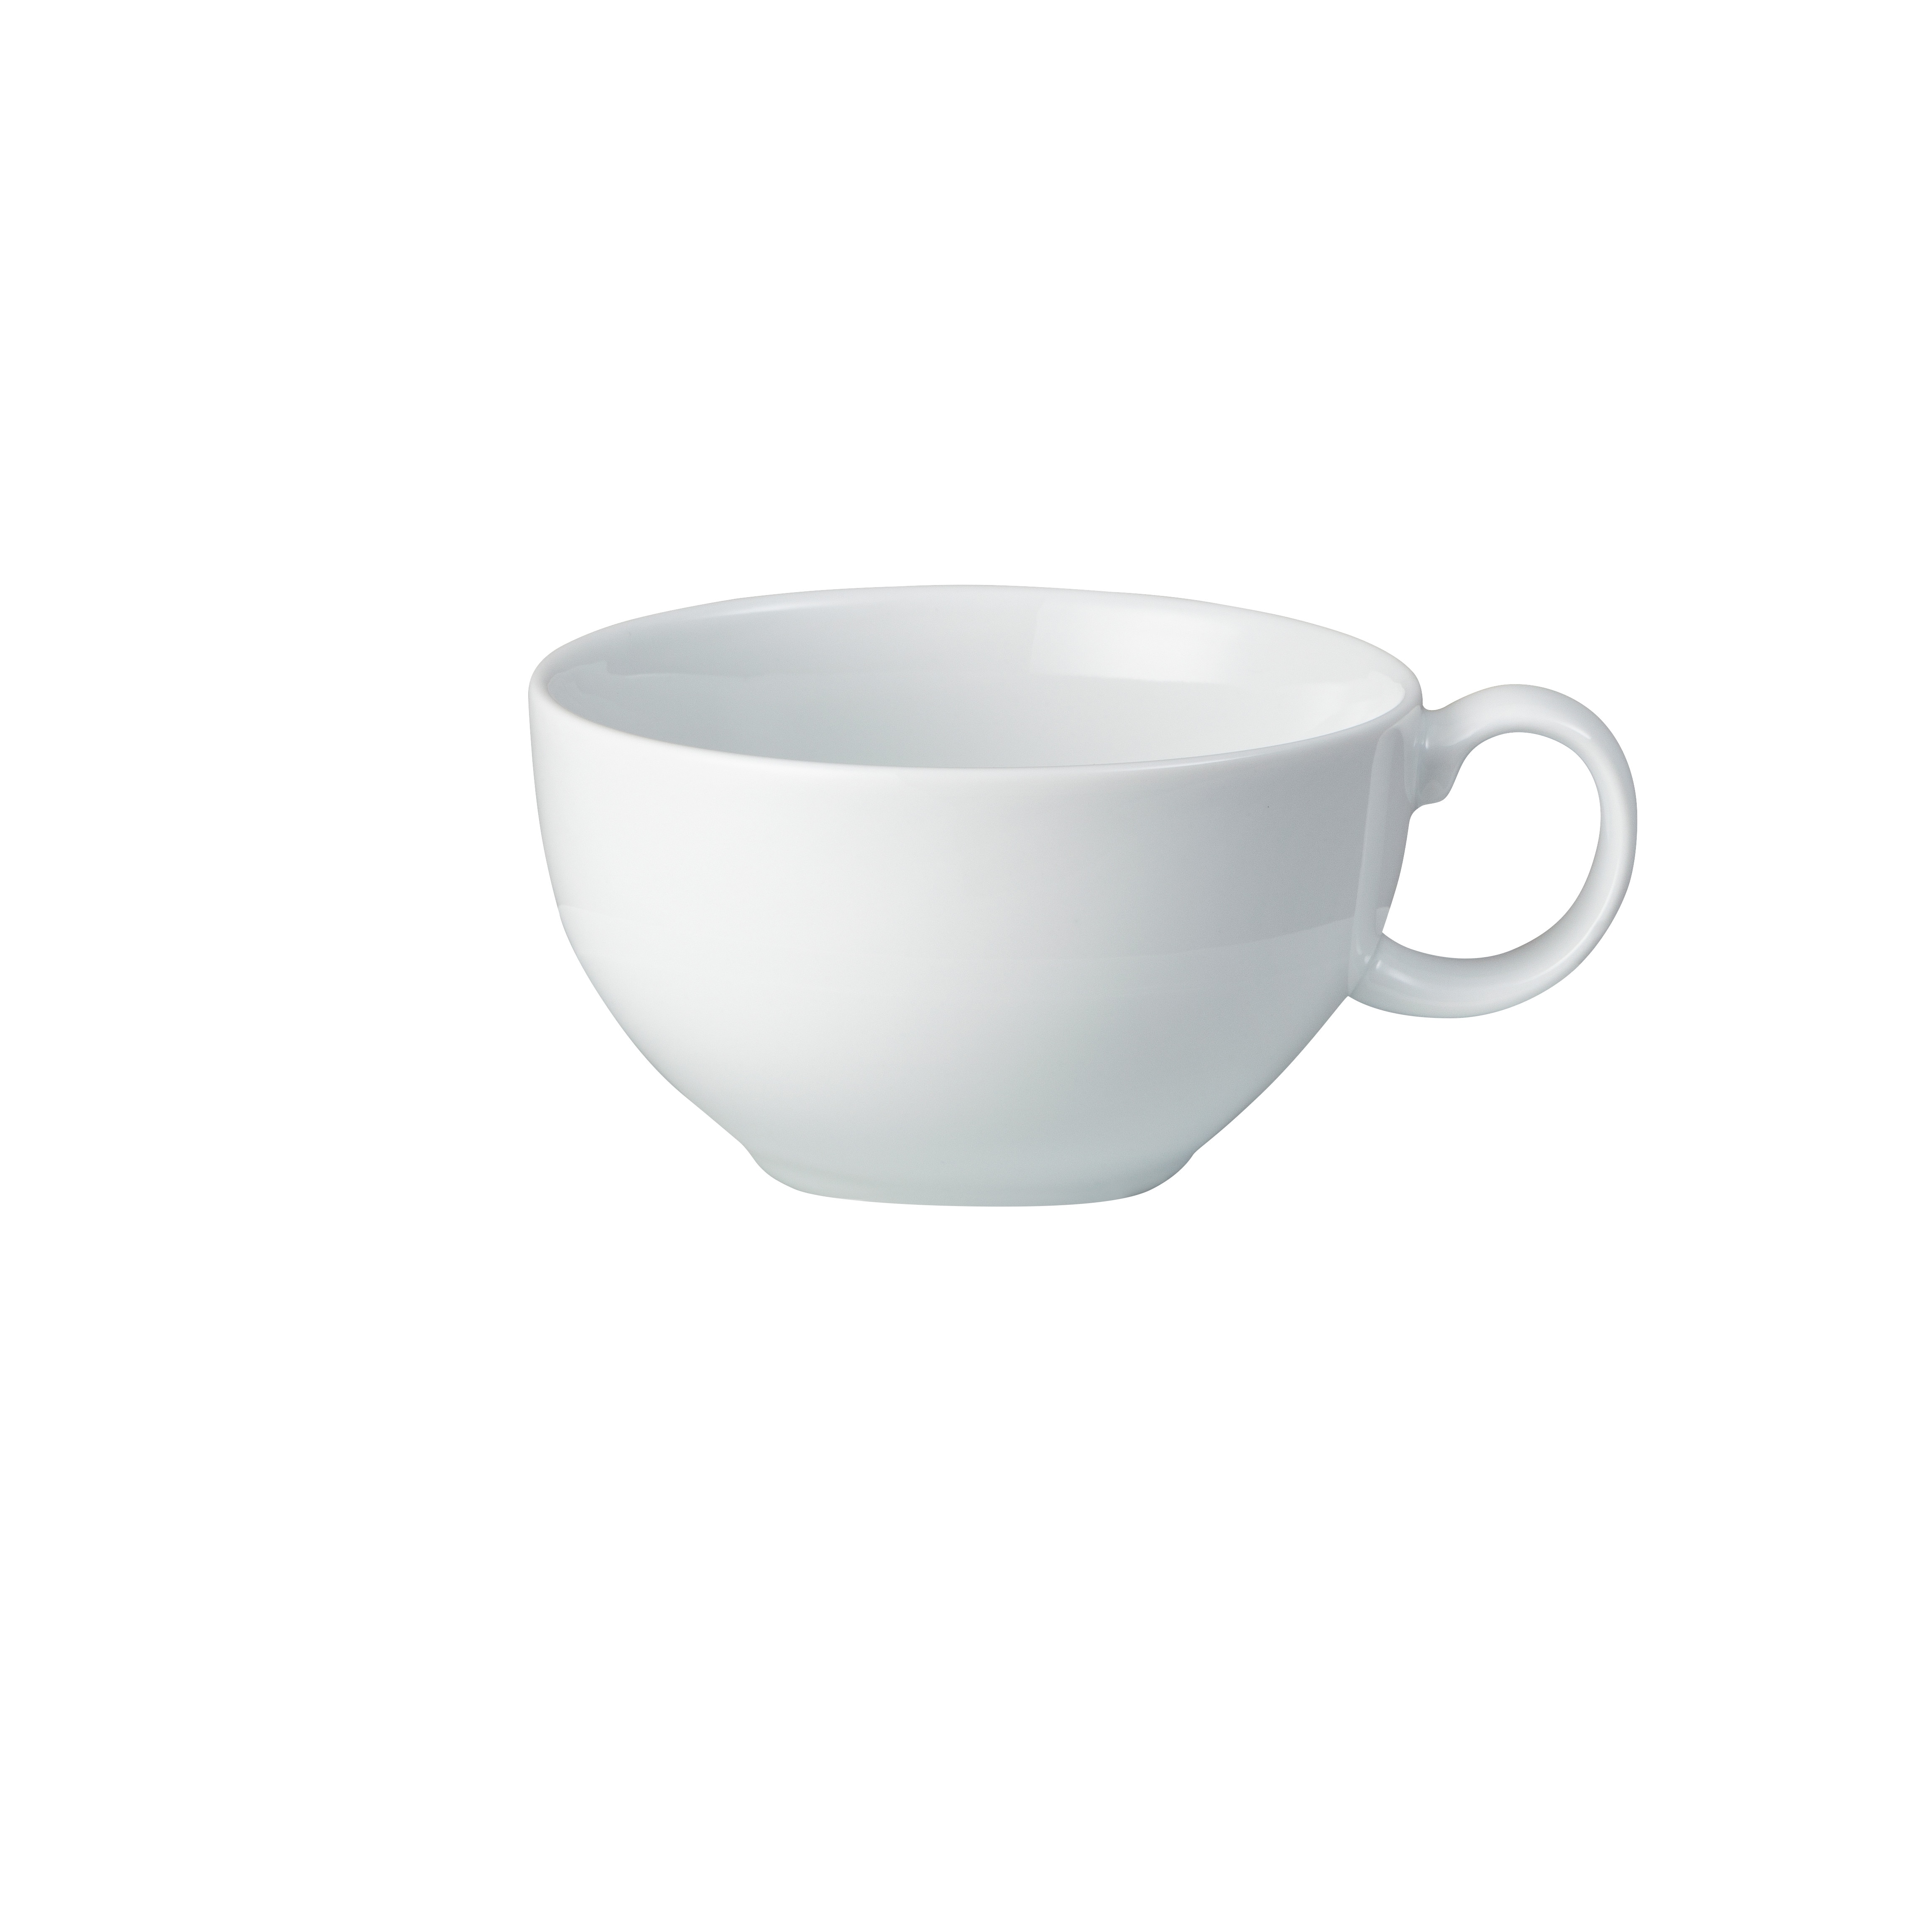 denby-white-porcelain-teacup